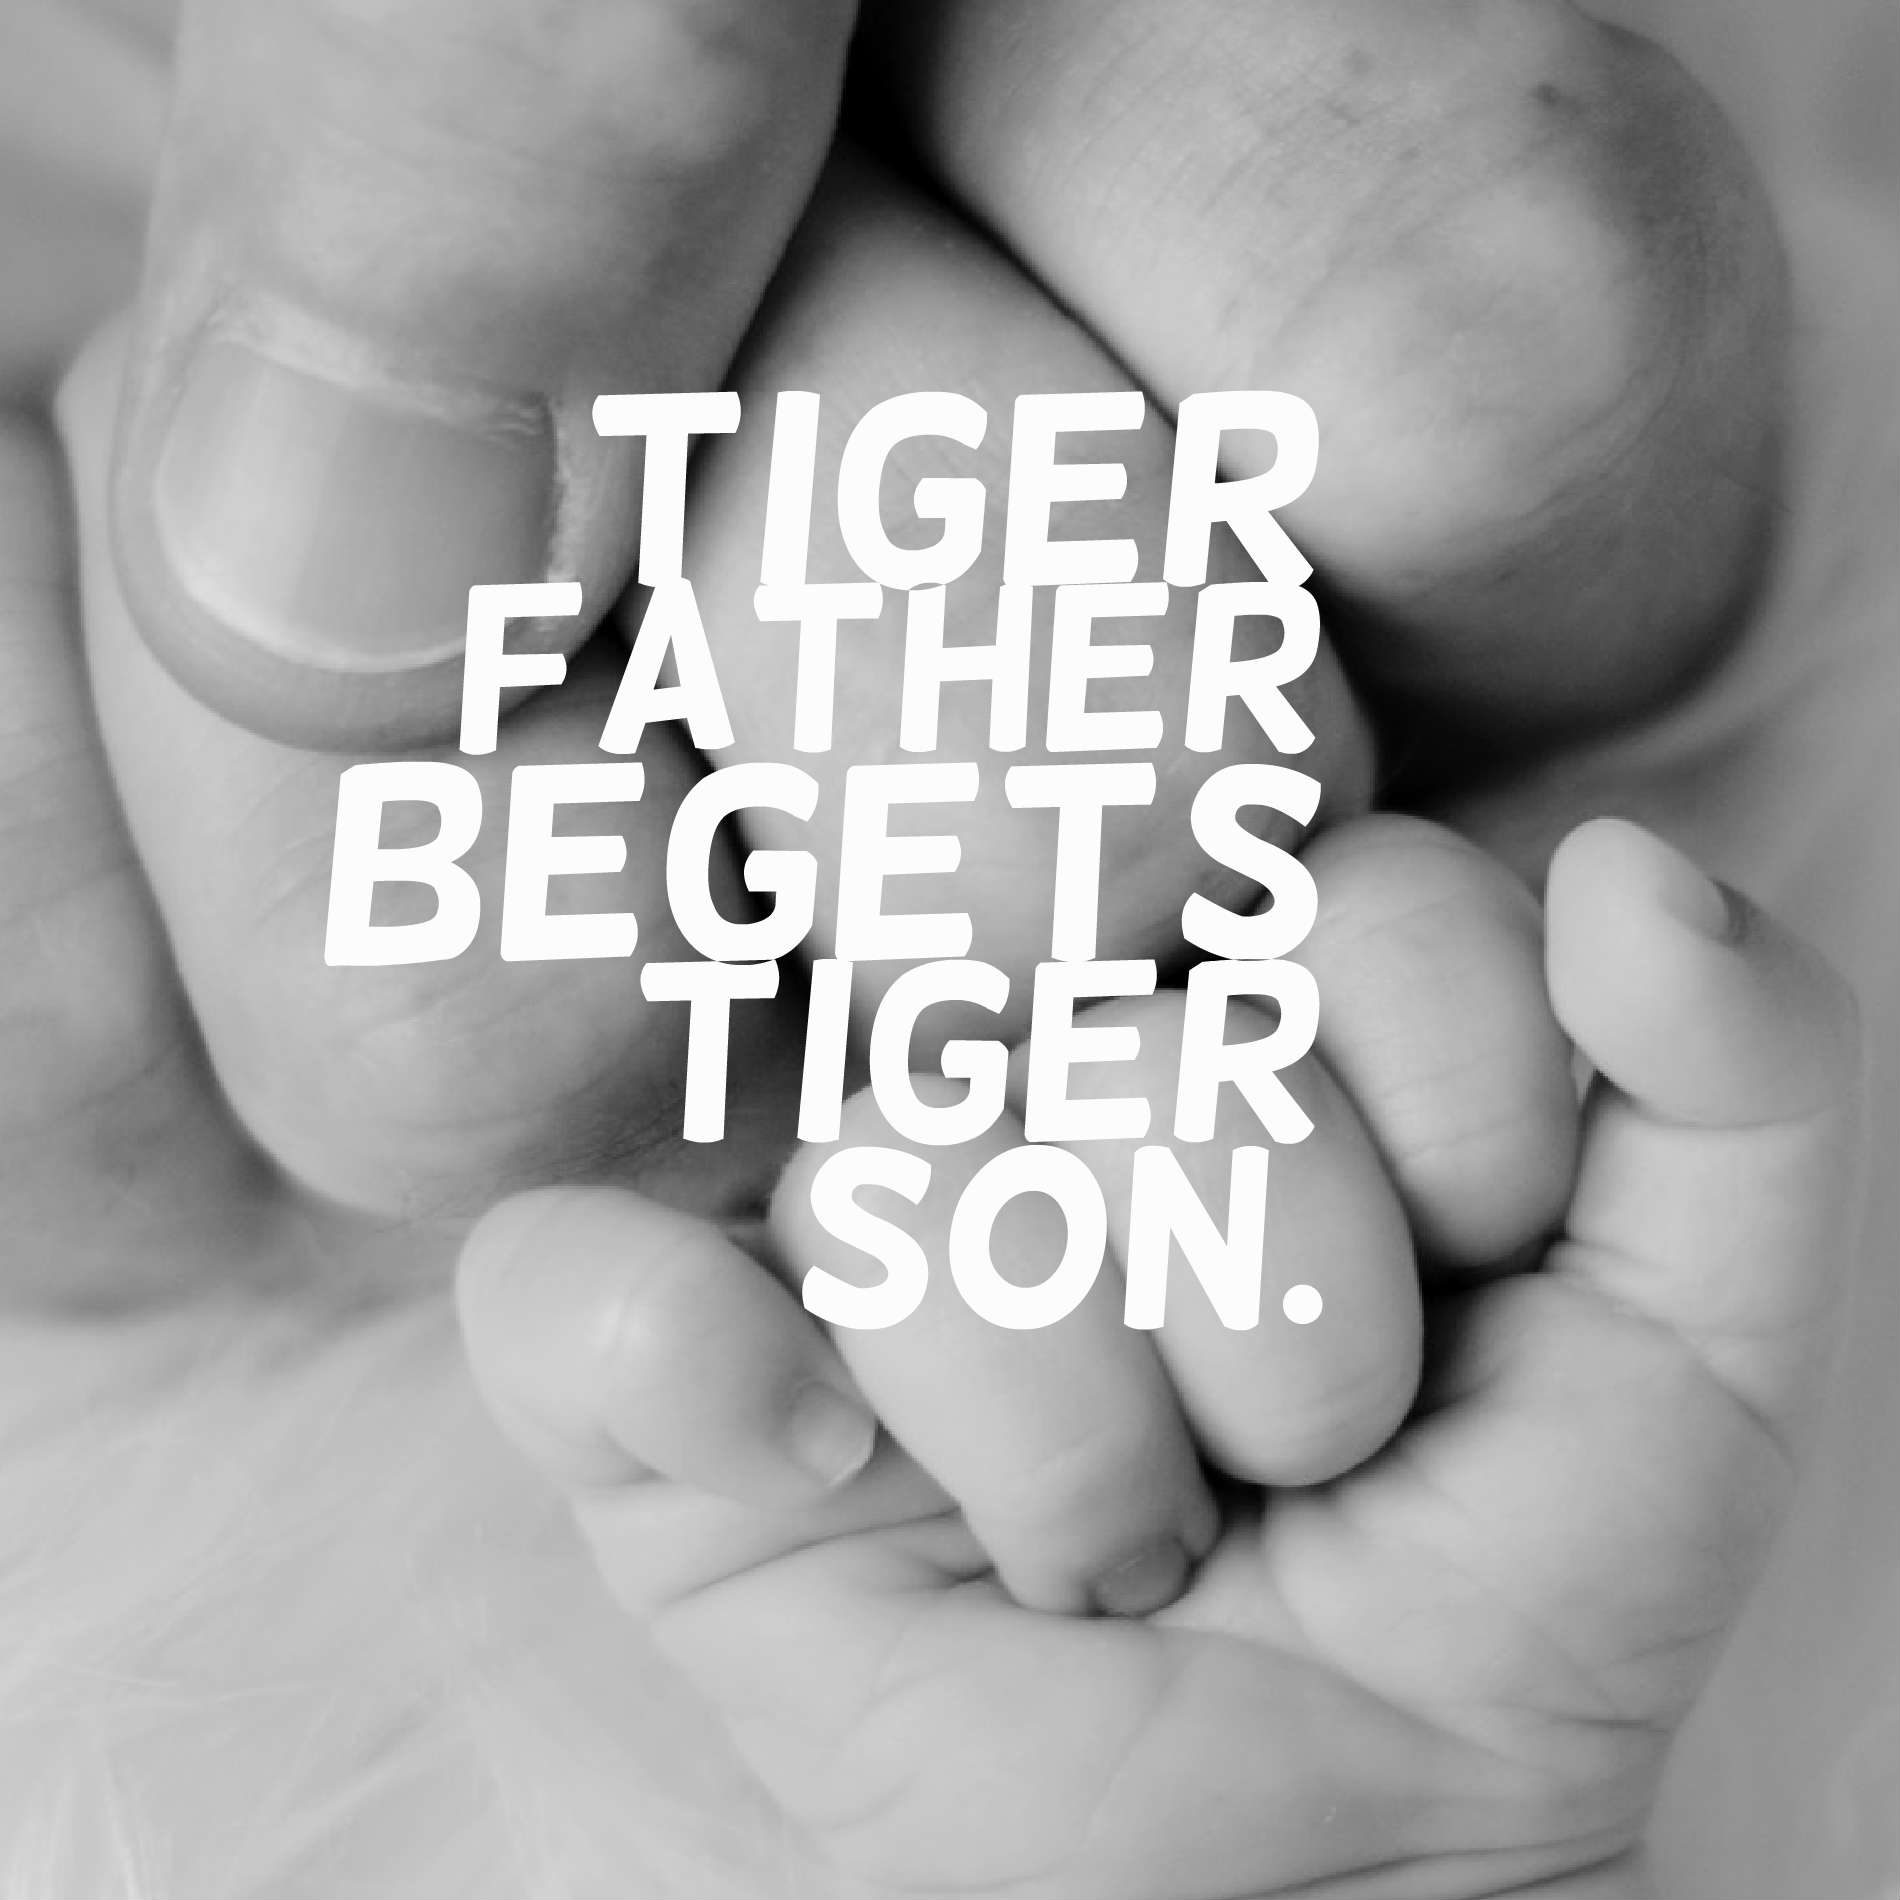 Tiger father begets tiger son.